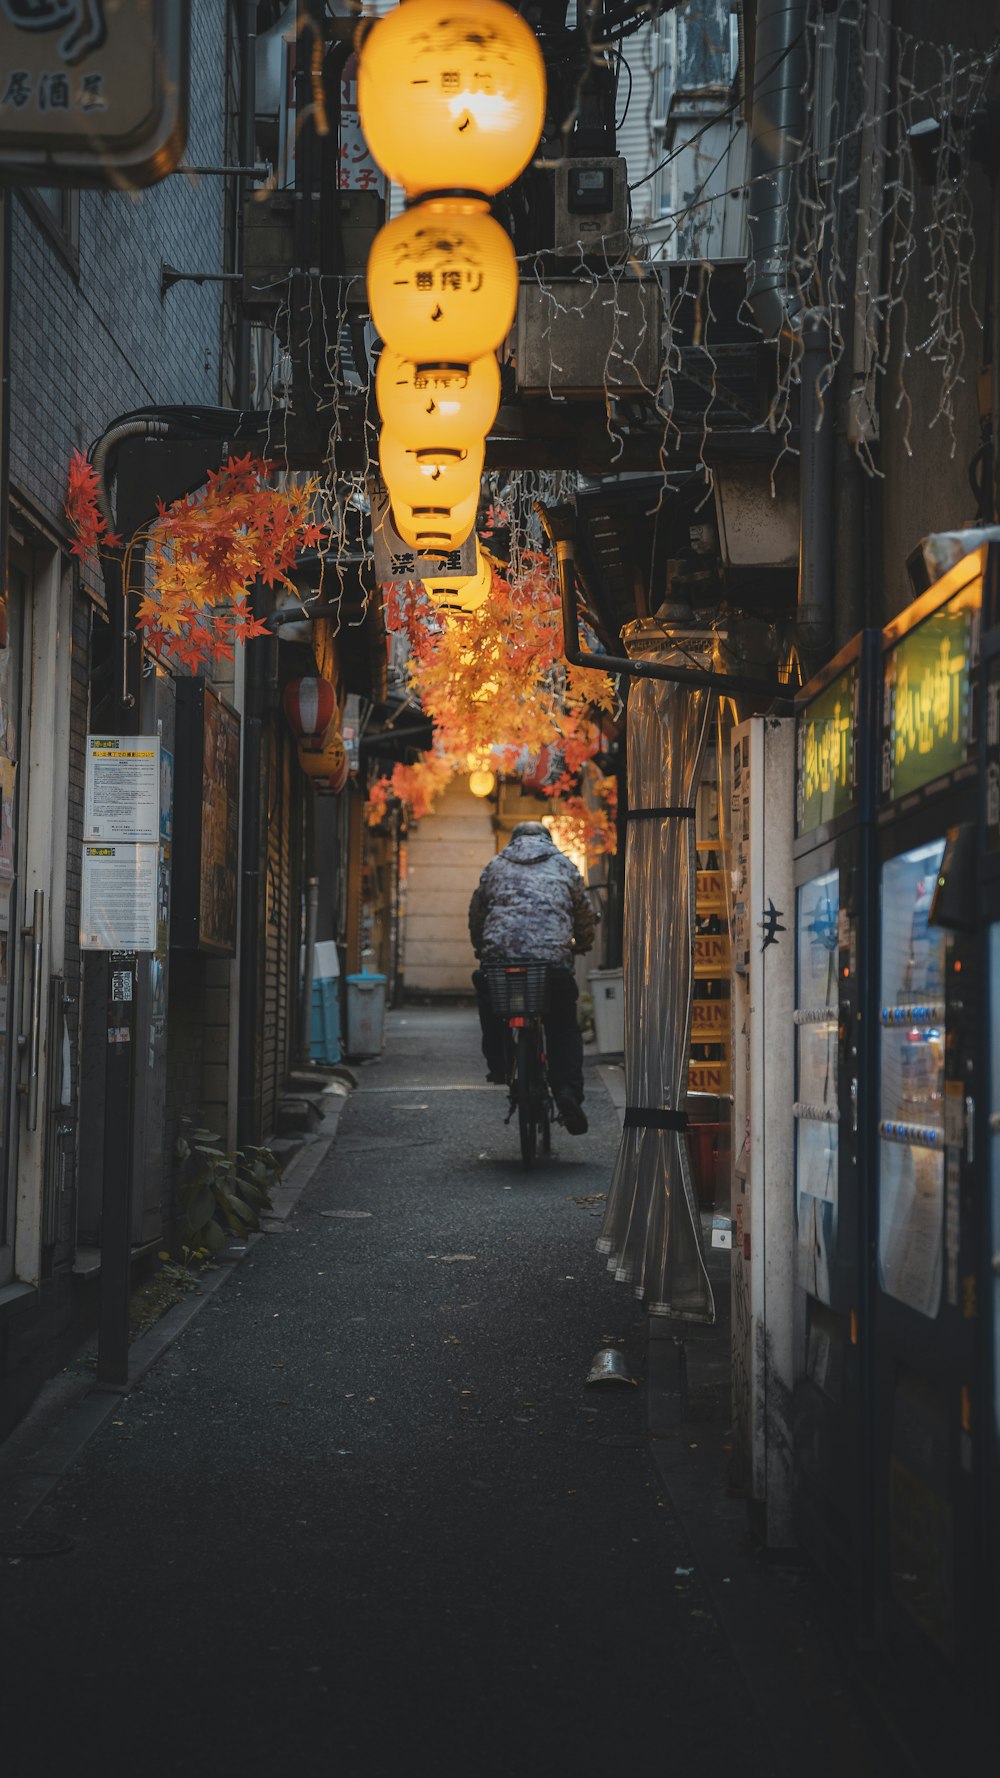 a person riding a bike down a narrow alley way